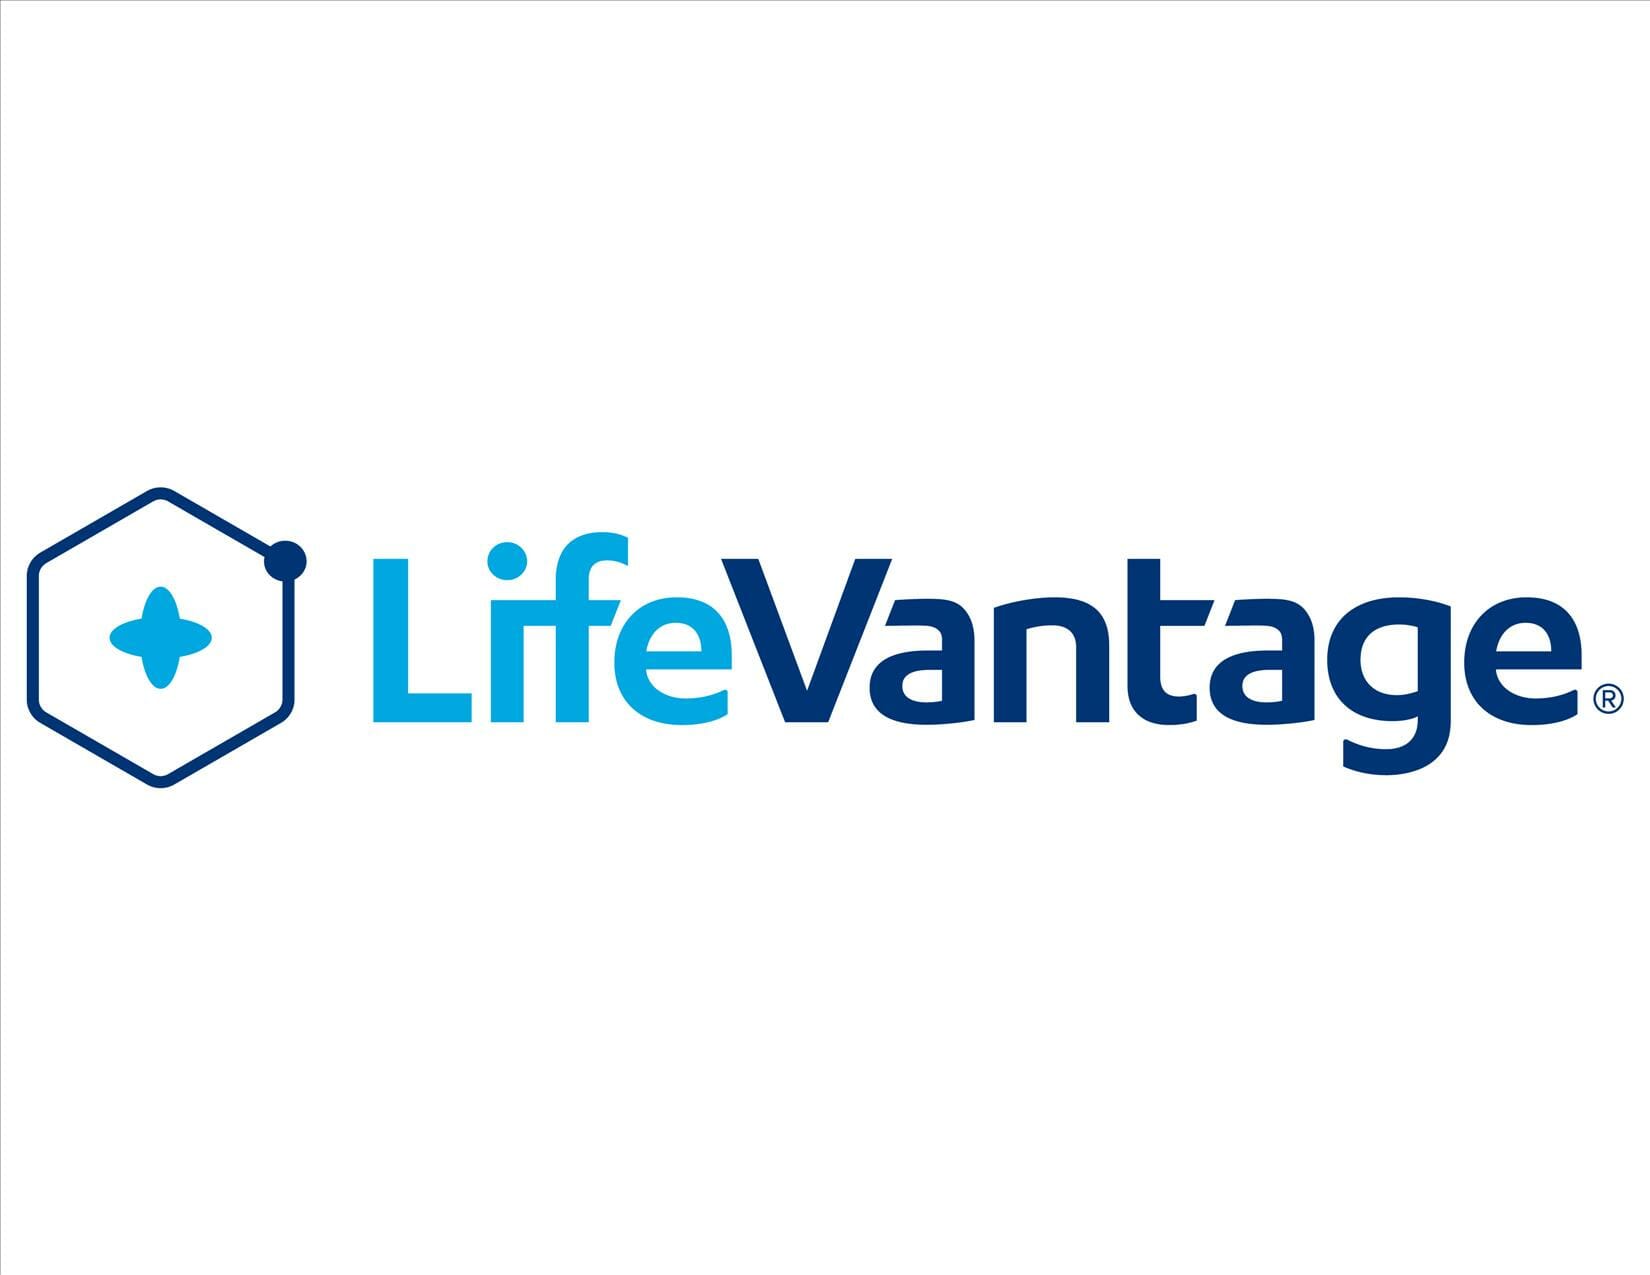 lifevantage logo